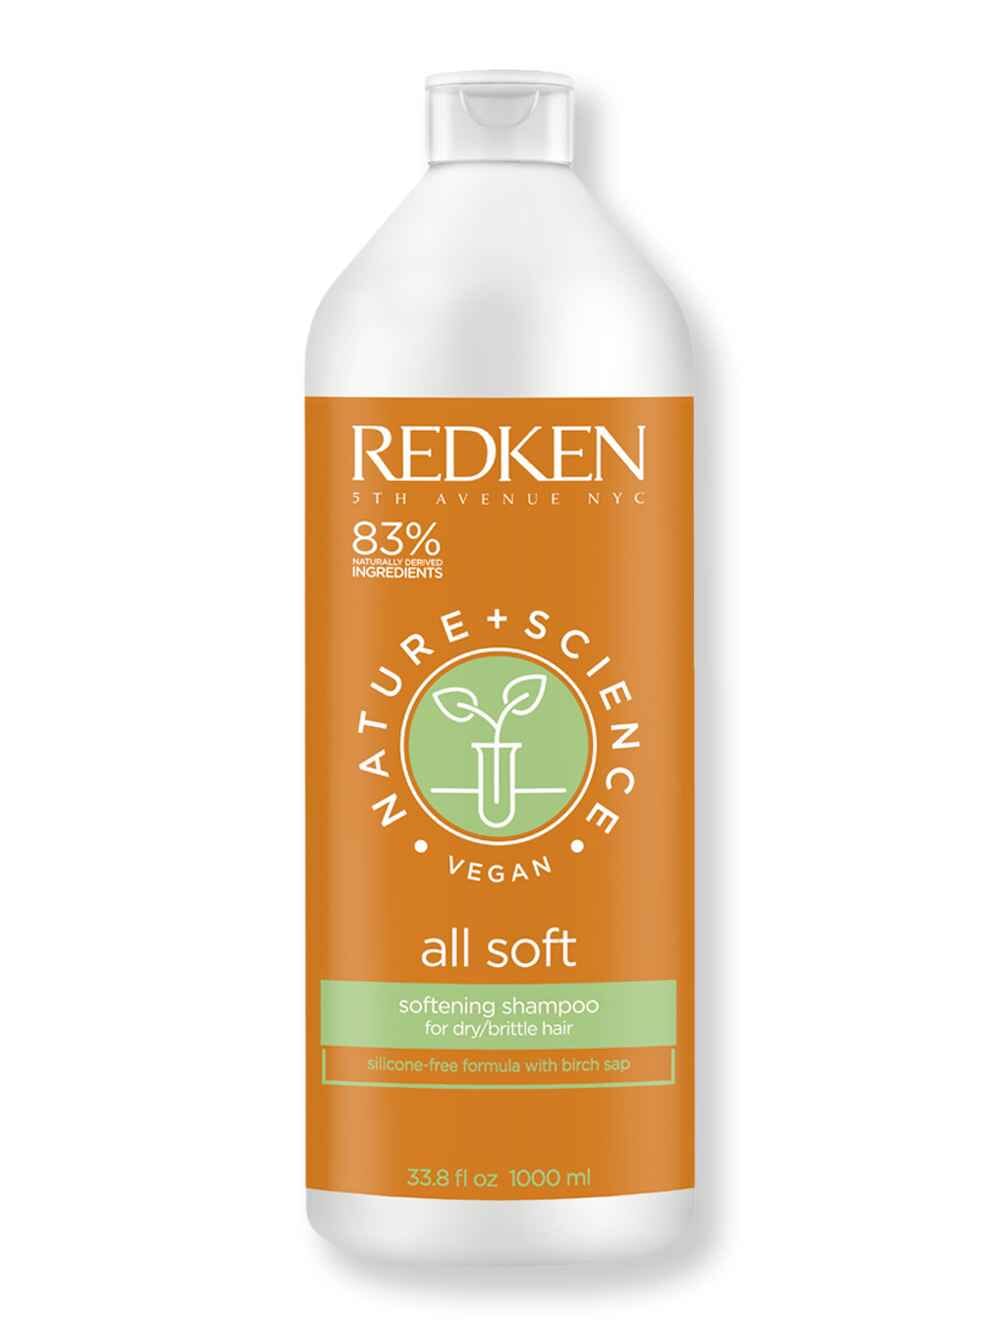 Redken Redken Nature + Science All Soft Shampoo Liter Shampoos 